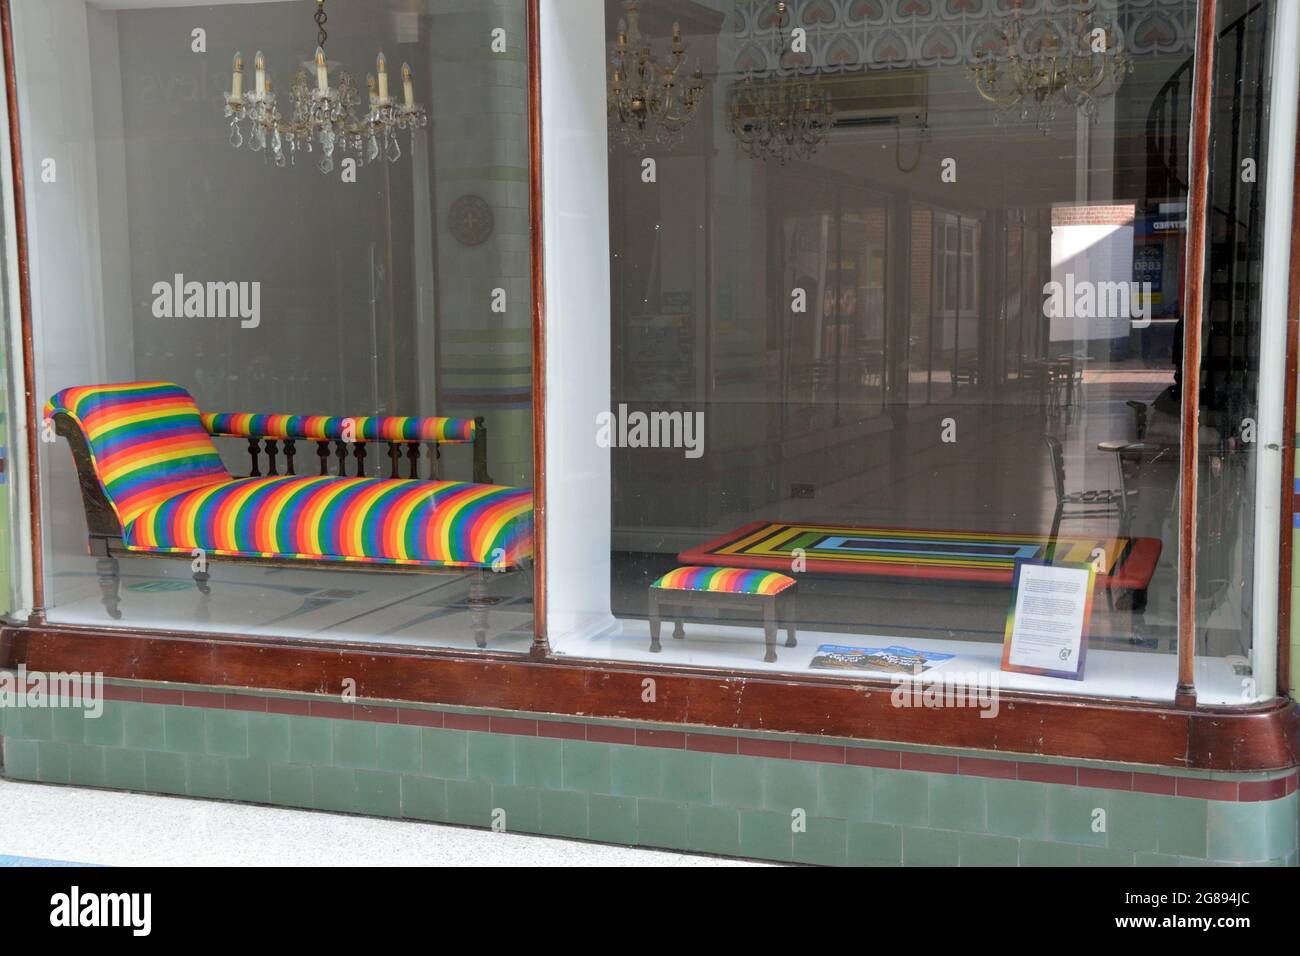 Rainbow furniture on display in shop window, Royal Arcade, Norwich, Norfolk, UK Stock Photo